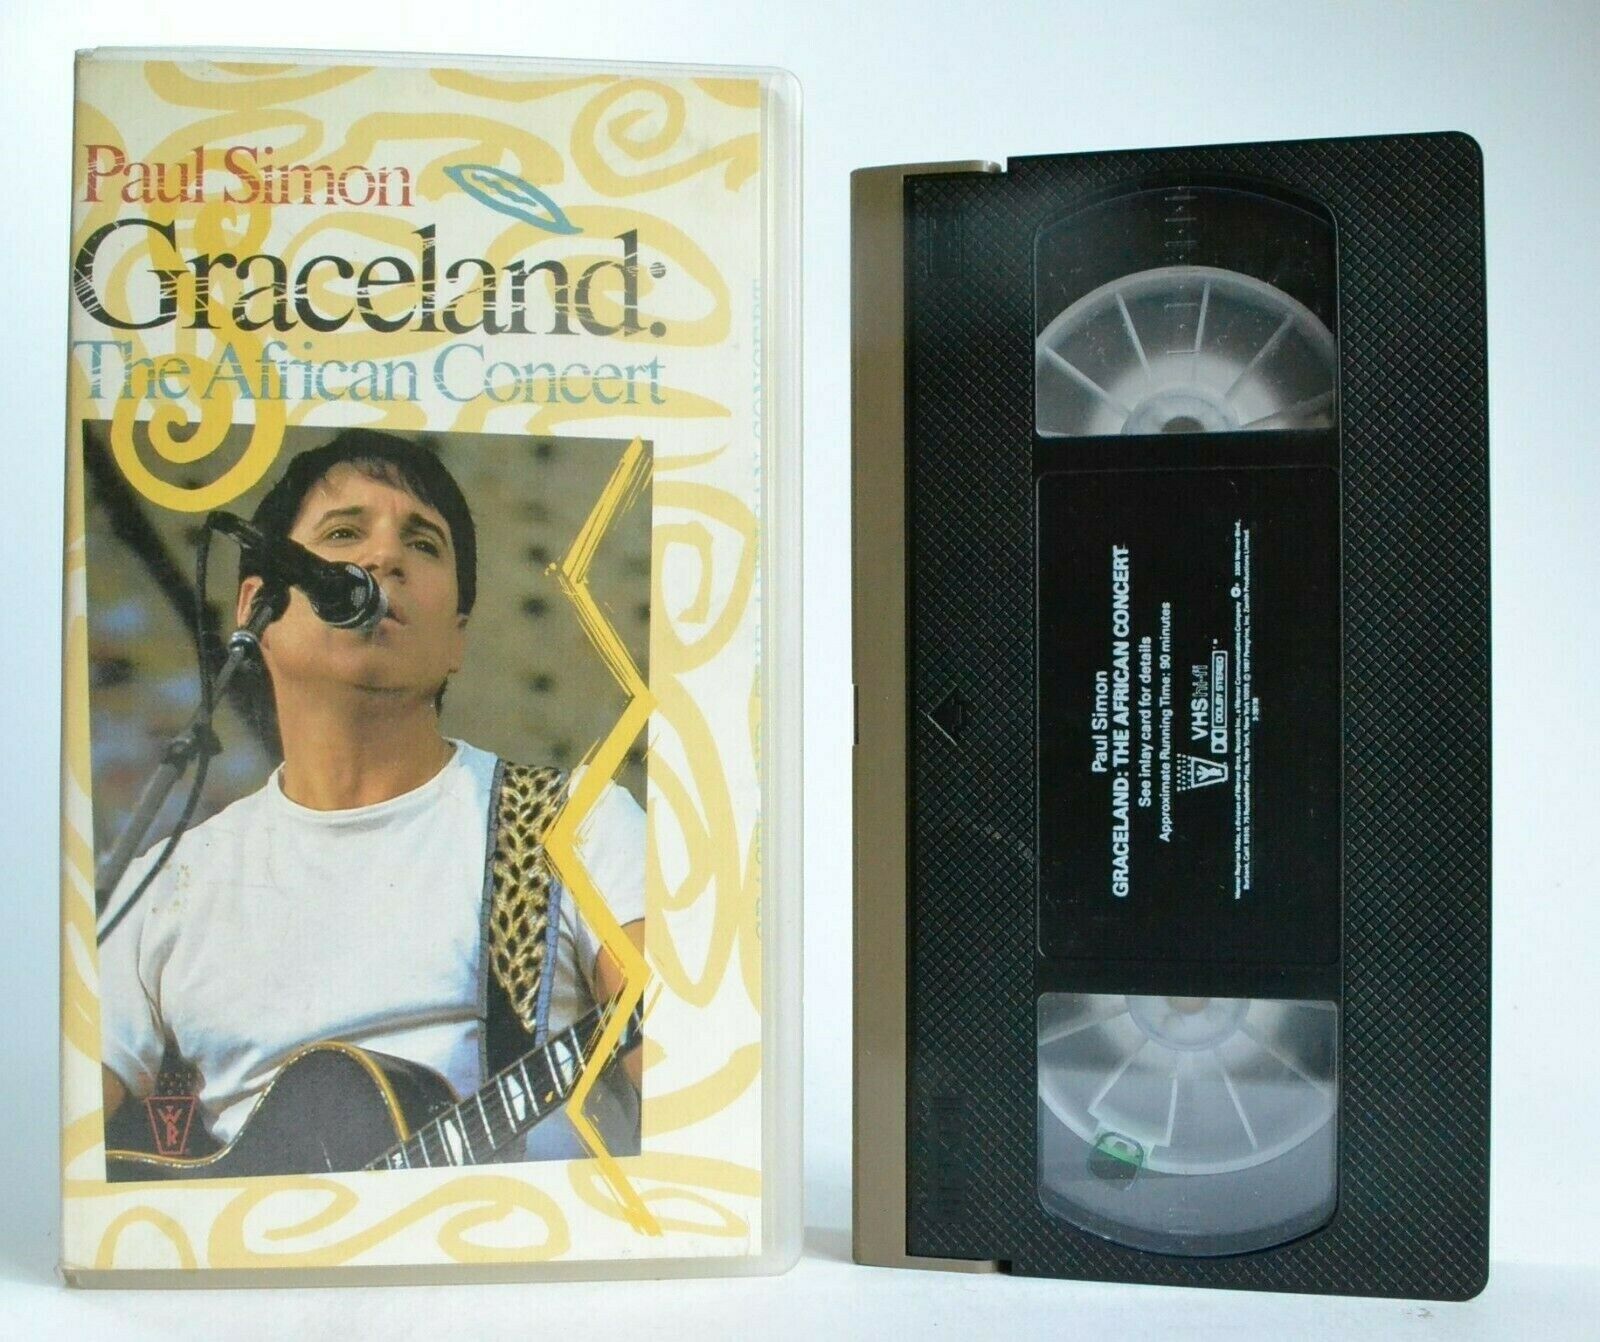 Paul Simon: Graceland (The African Concert) - Live Performance - Music - Pal VHS-